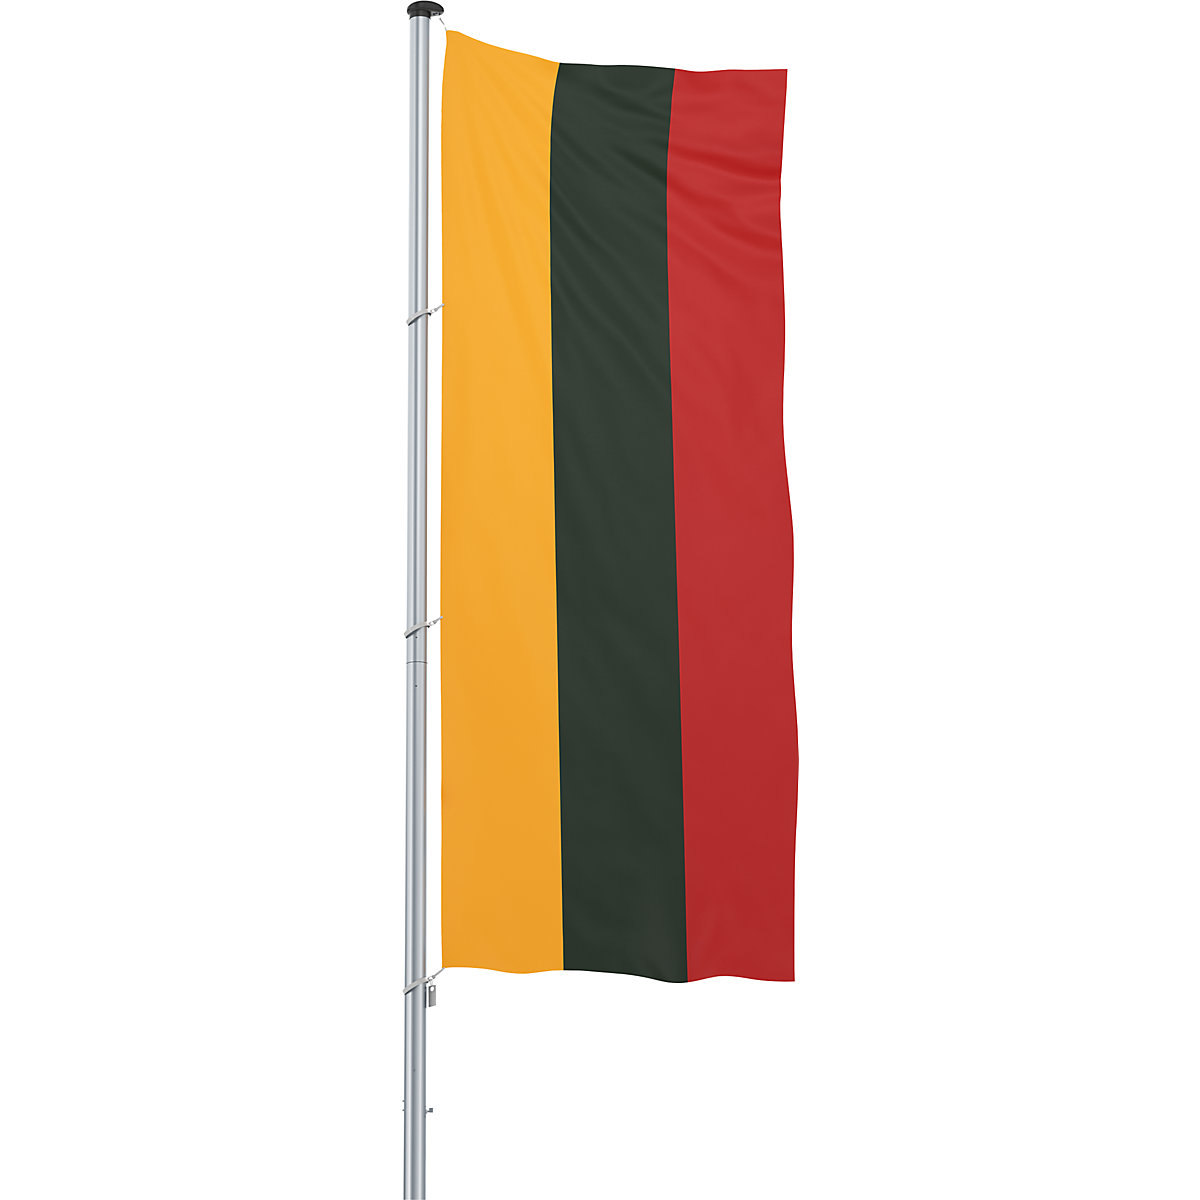 Mannus – Bandera para izar/bandera del país, formato 1,2 x 3 m, Lituania